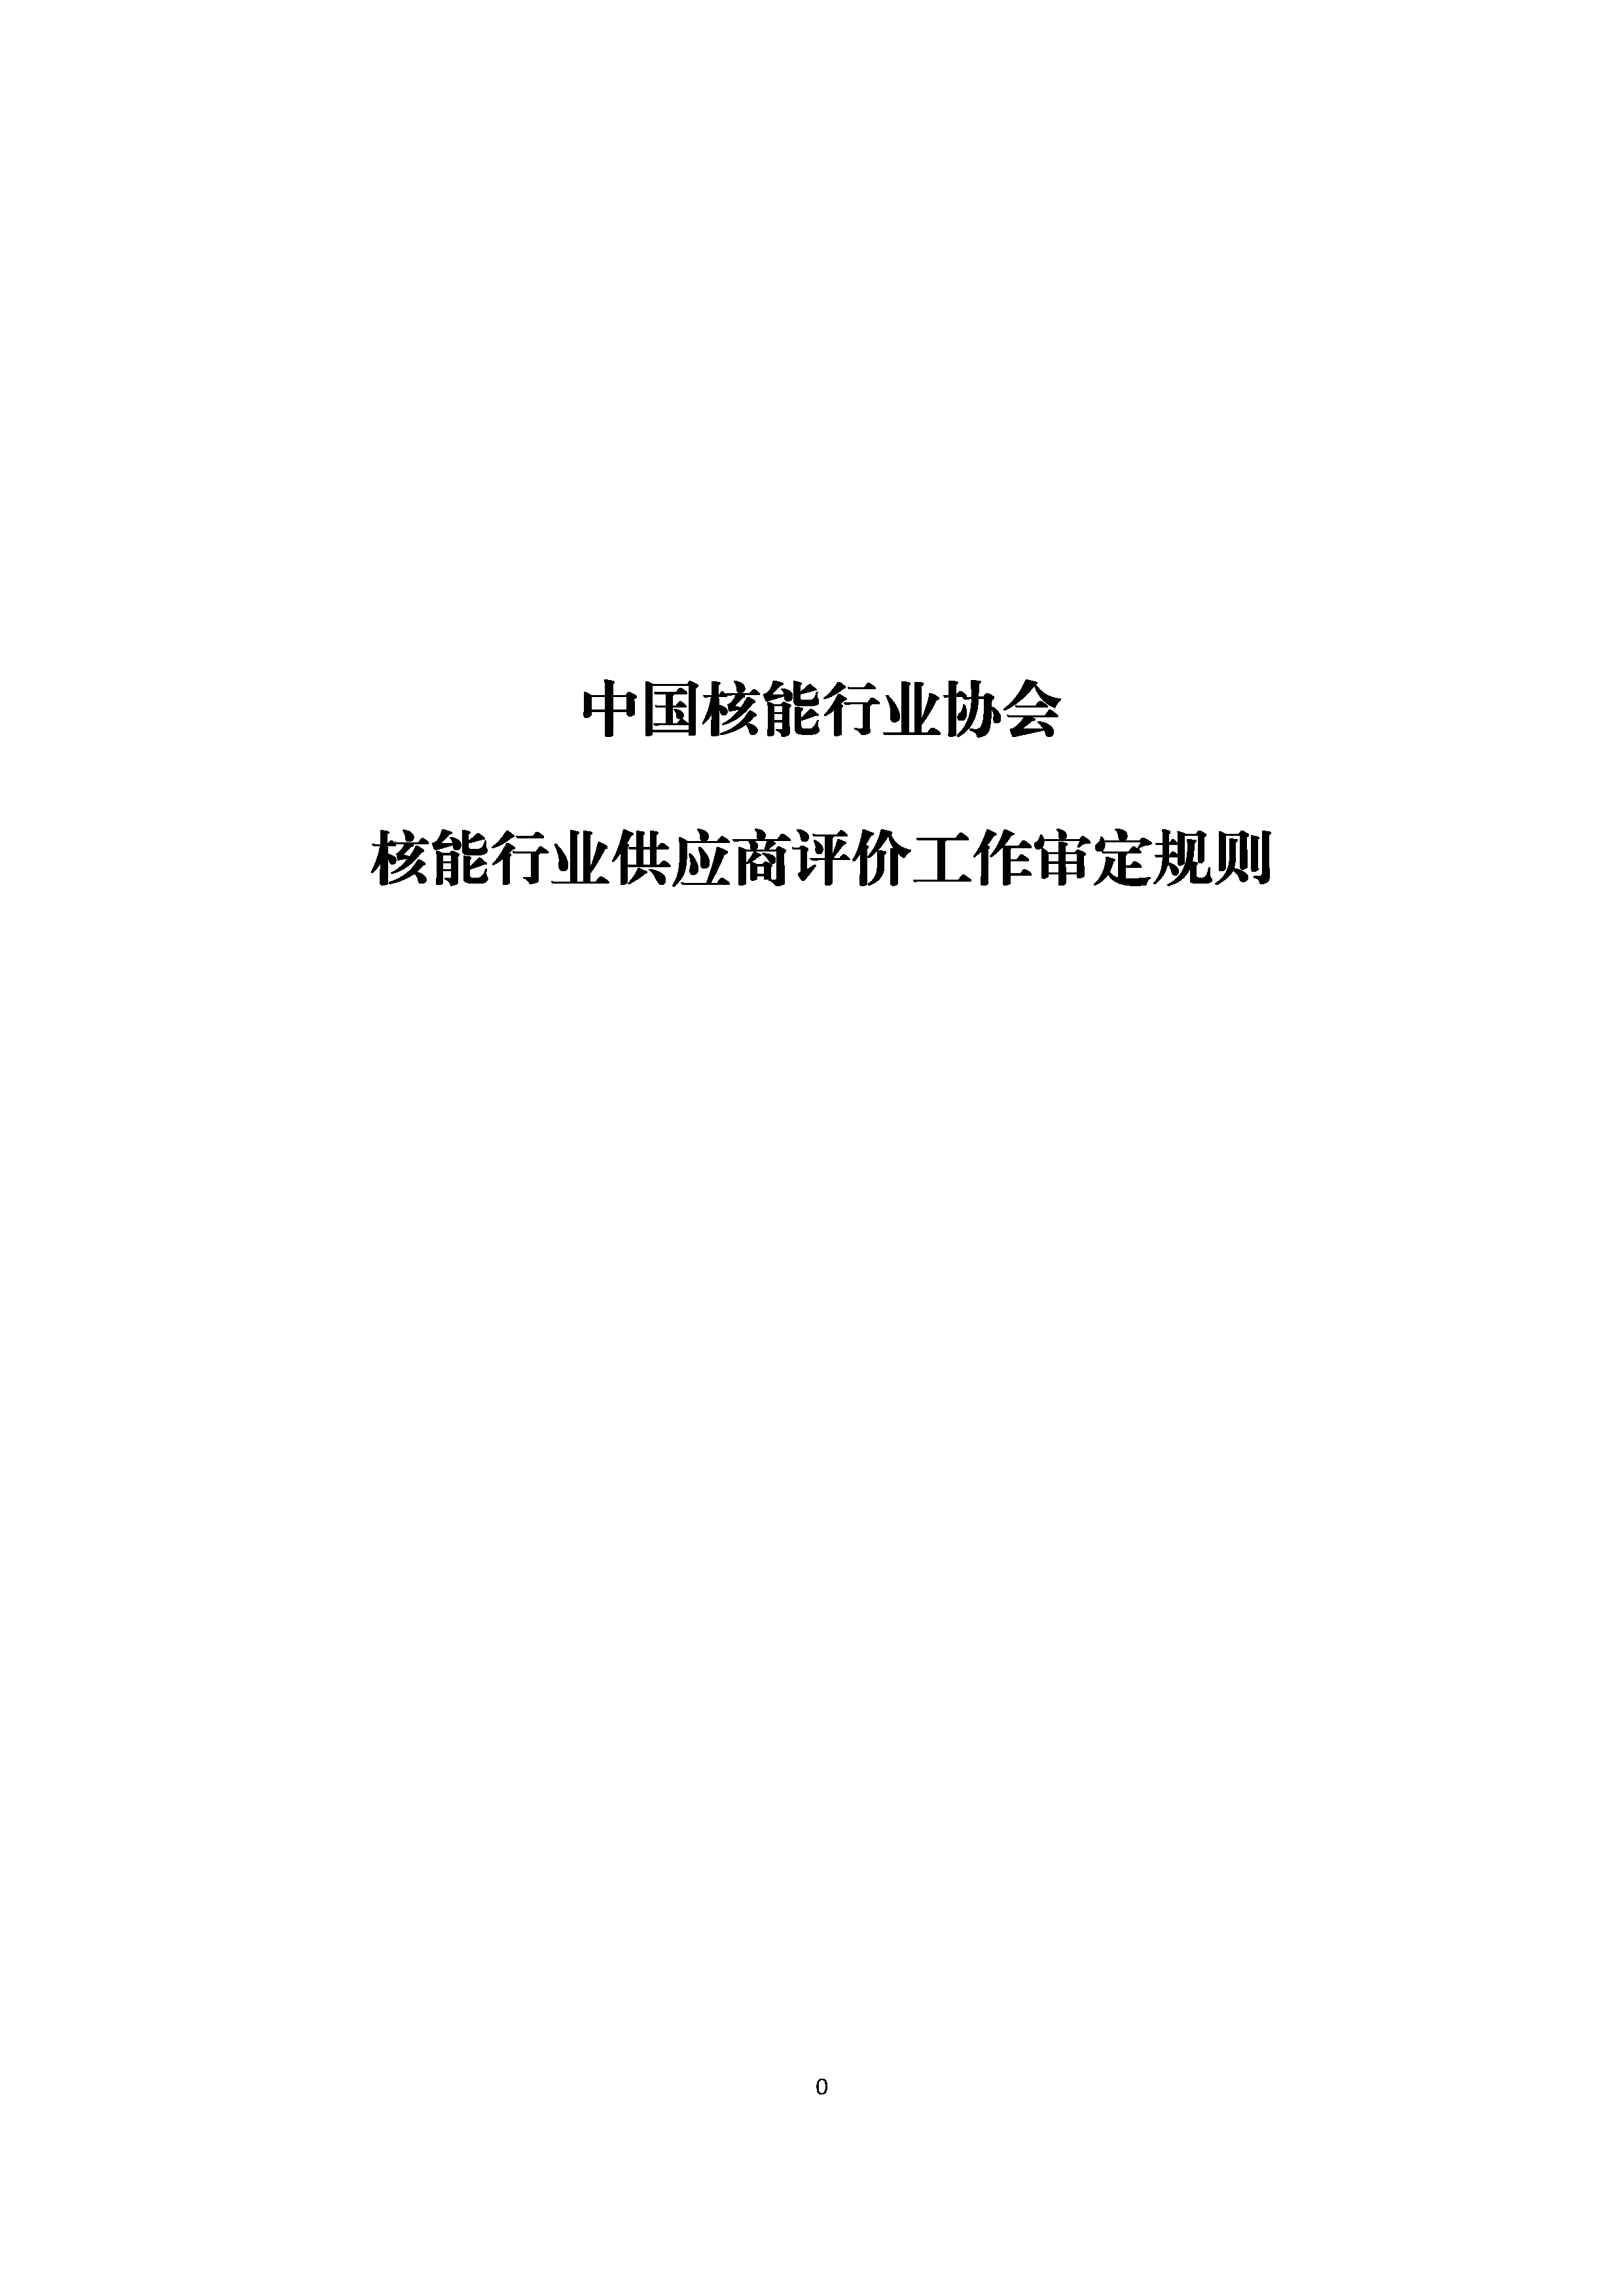 B.2《中国核能行业协会供应商评价工作审定规则》_页面_01.png